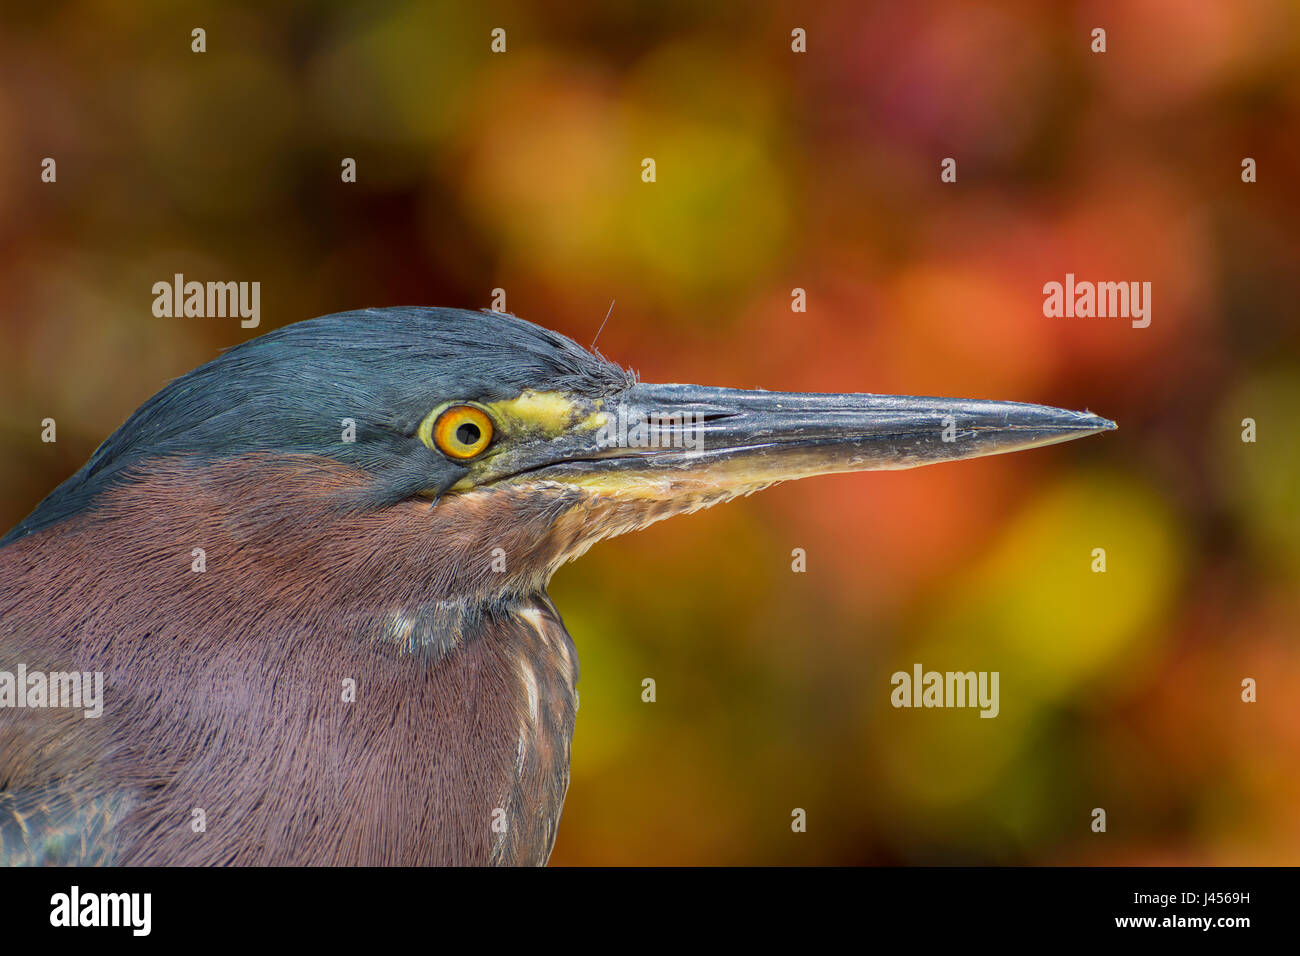 Green Heron close up - Anna Maria Island, Florida, USA Stockfoto